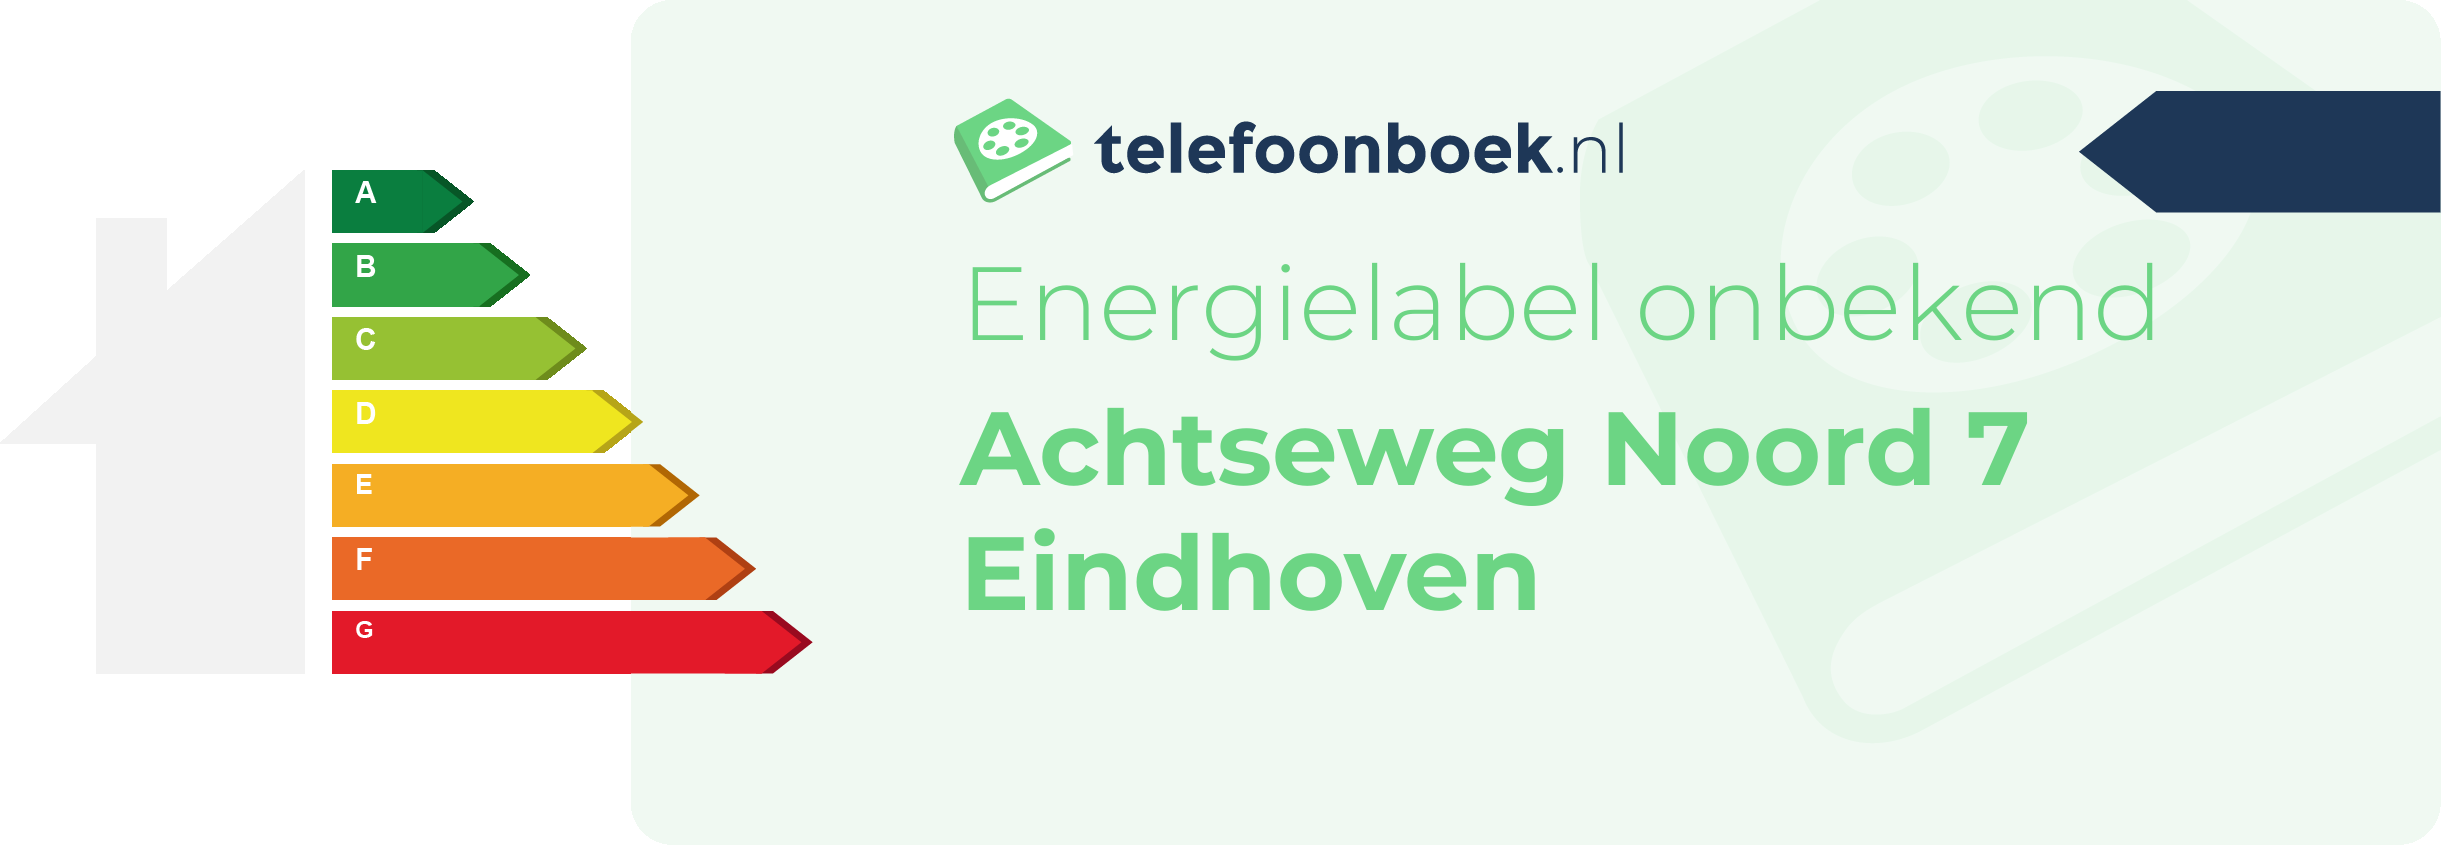 Energielabel Achtseweg Noord 7 Eindhoven